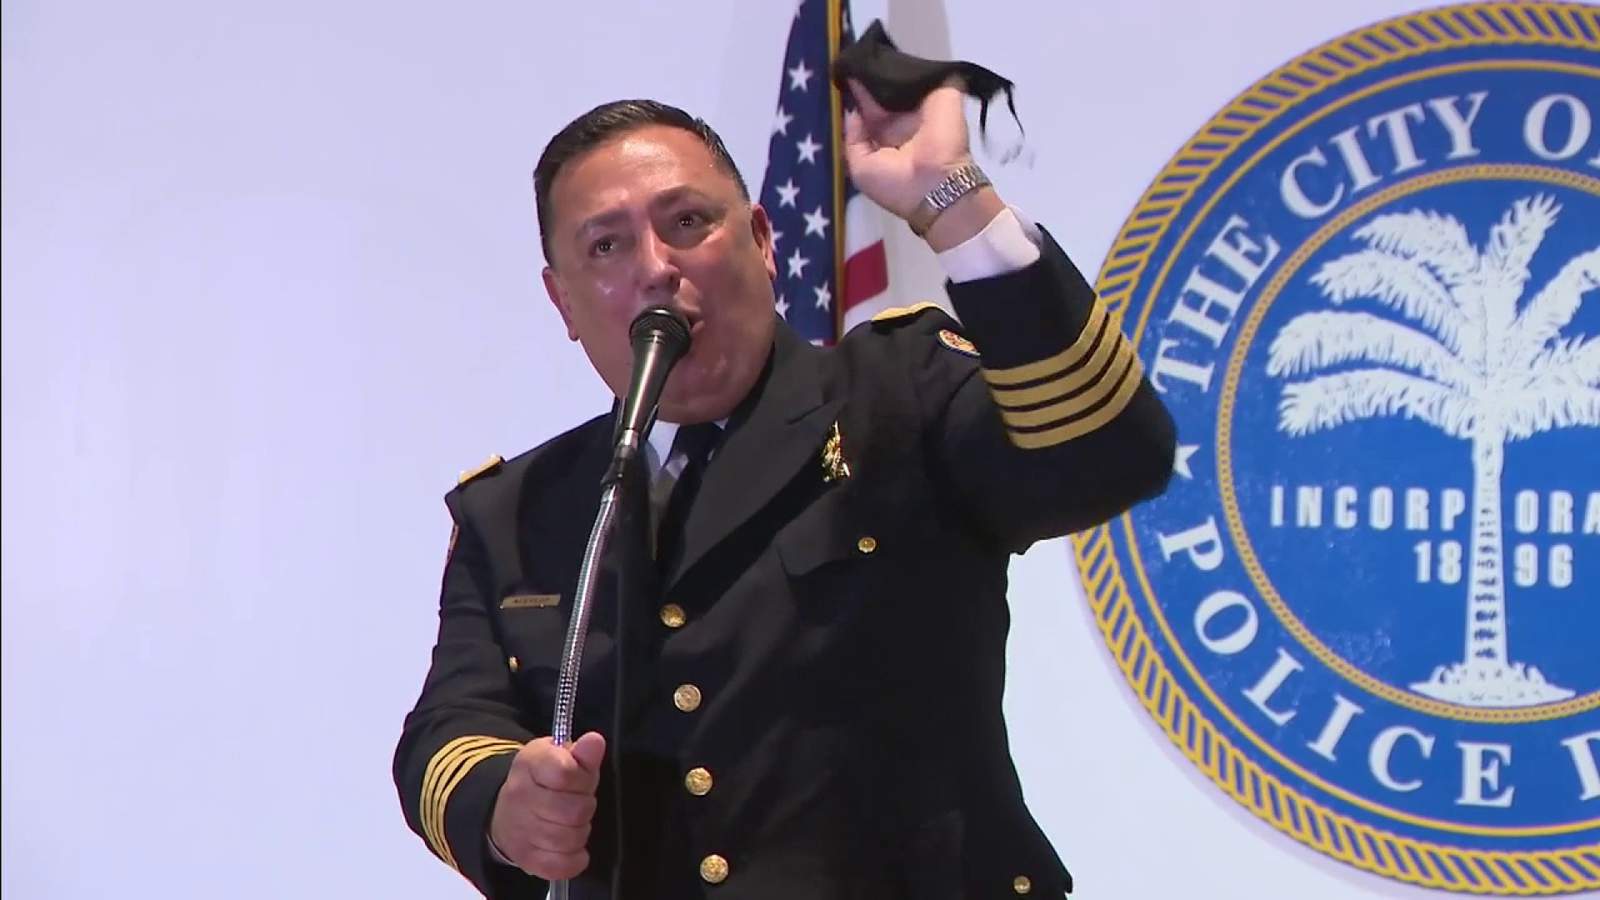 Art Acevedo sworn in as City of Miami Police Chief